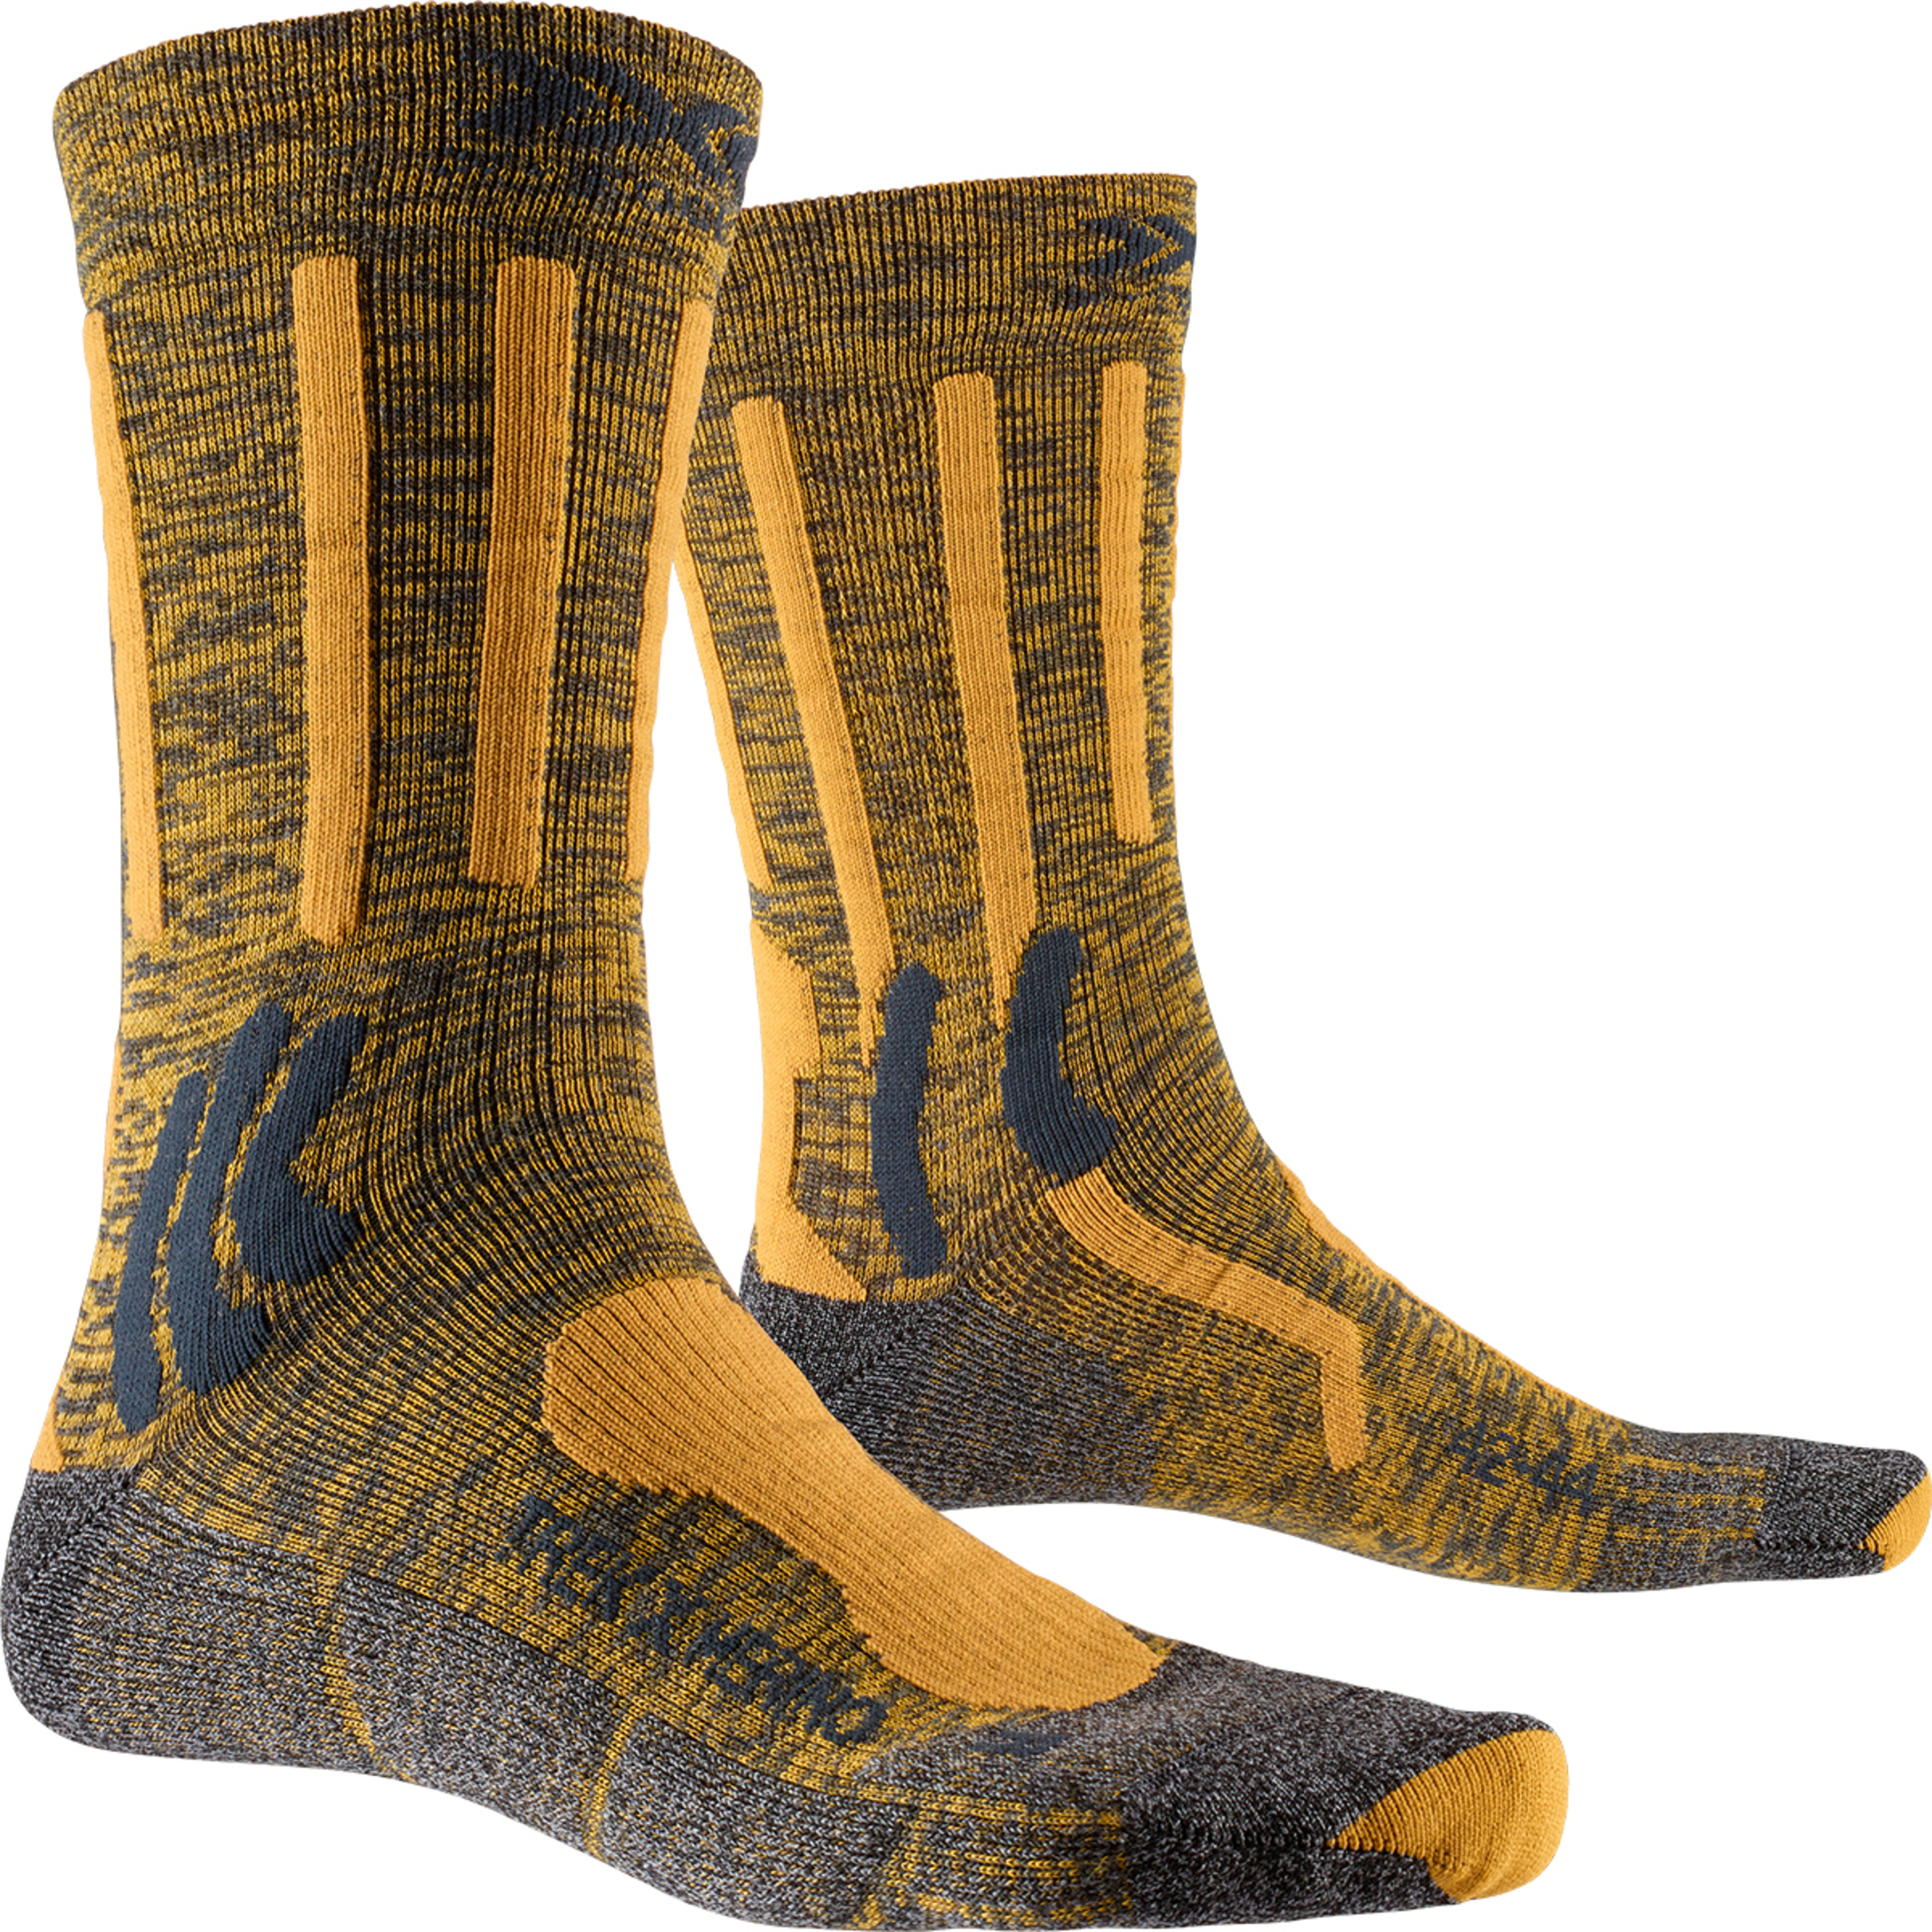 Calcetin Trek X Merino  X-socks - Amarillo  MKP